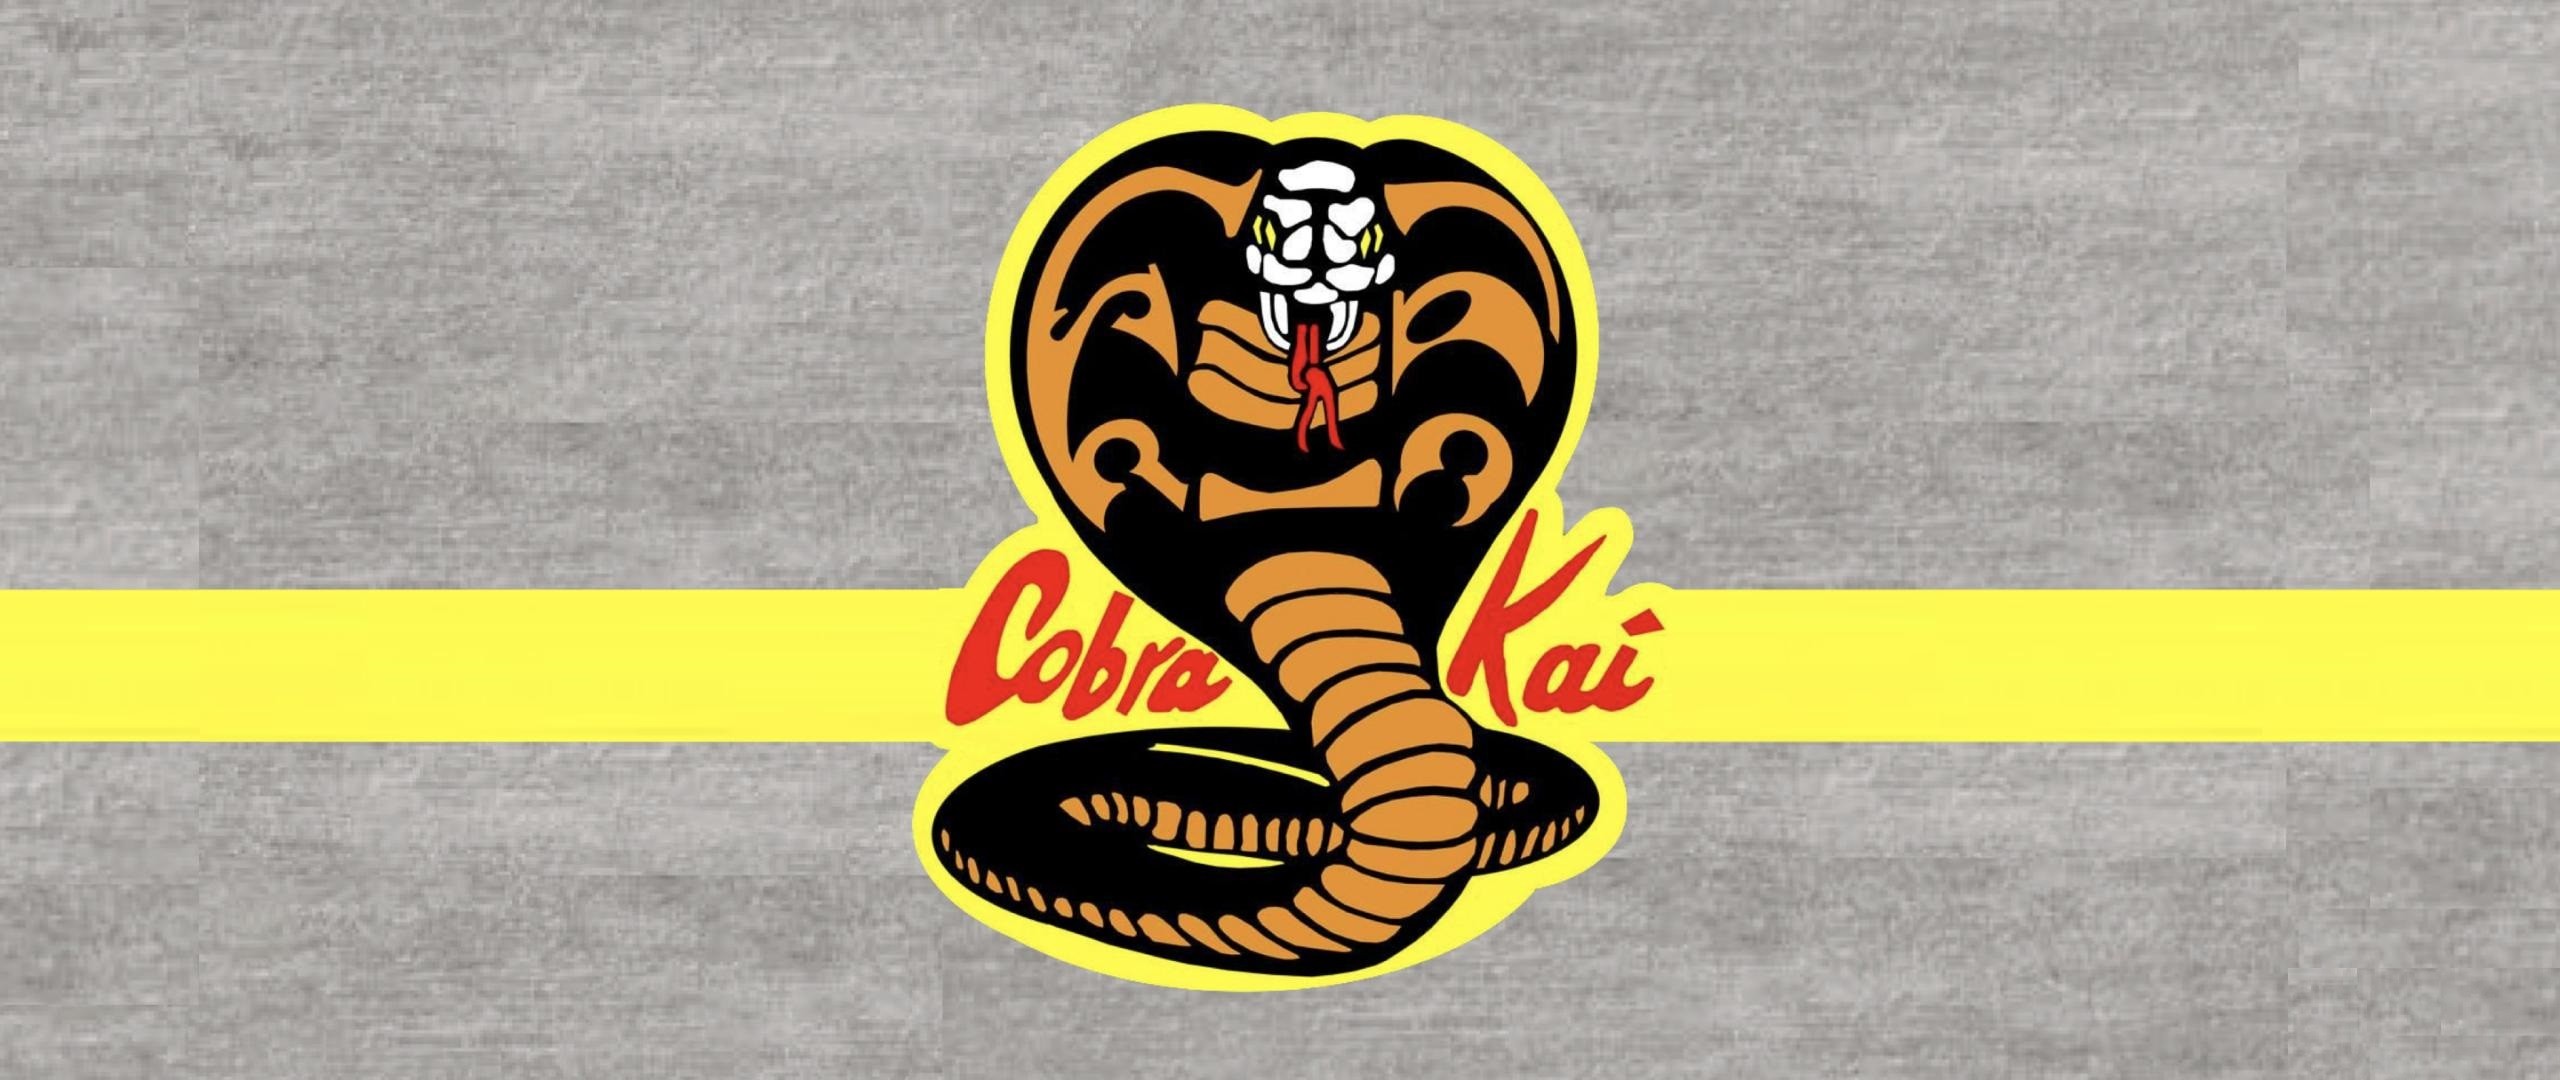 Cobra Kai Wallpaper - Wallpaper Sun.